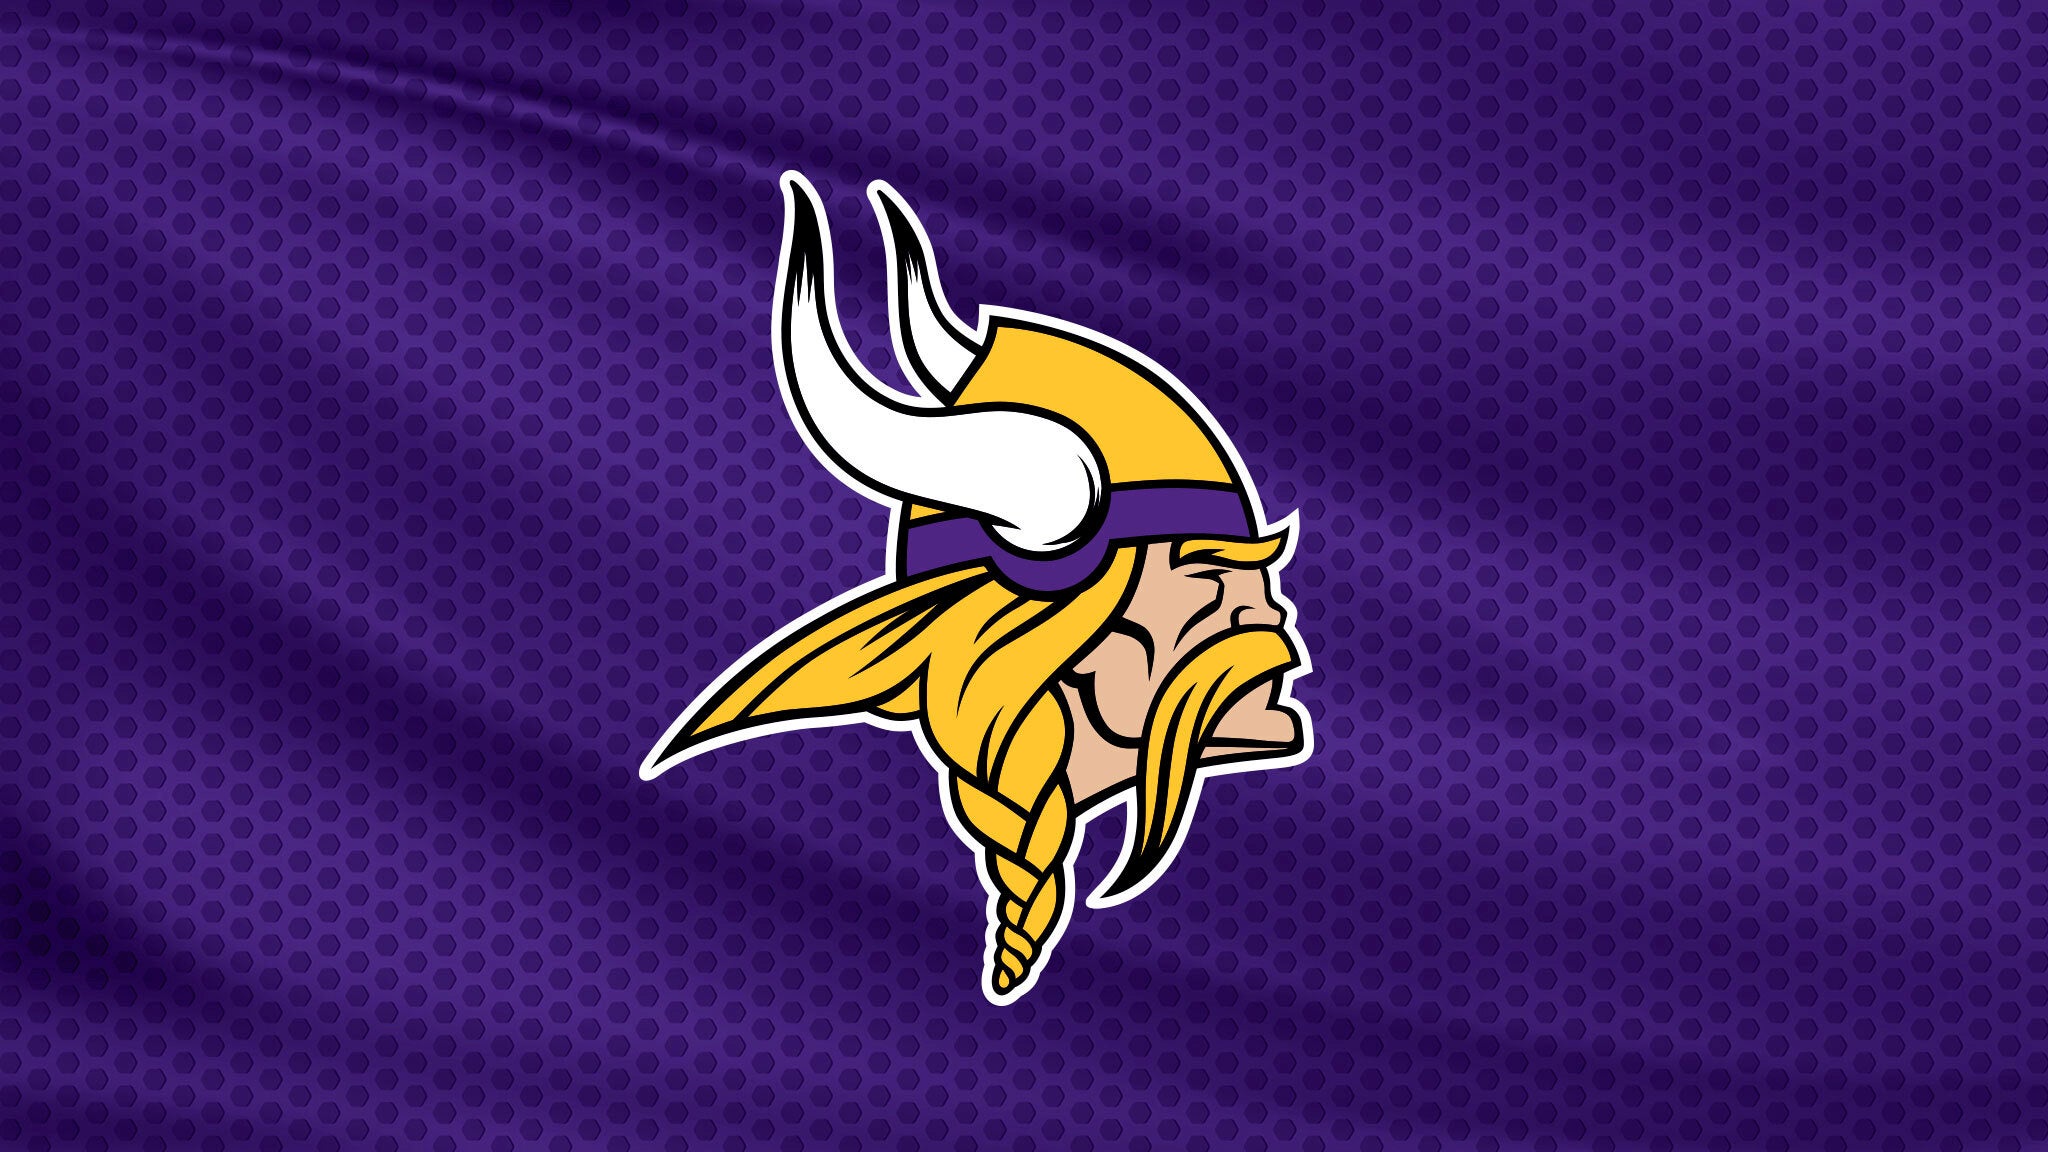 Minnesota Vikings v Las Vegas Raiders - Preseason Game hero